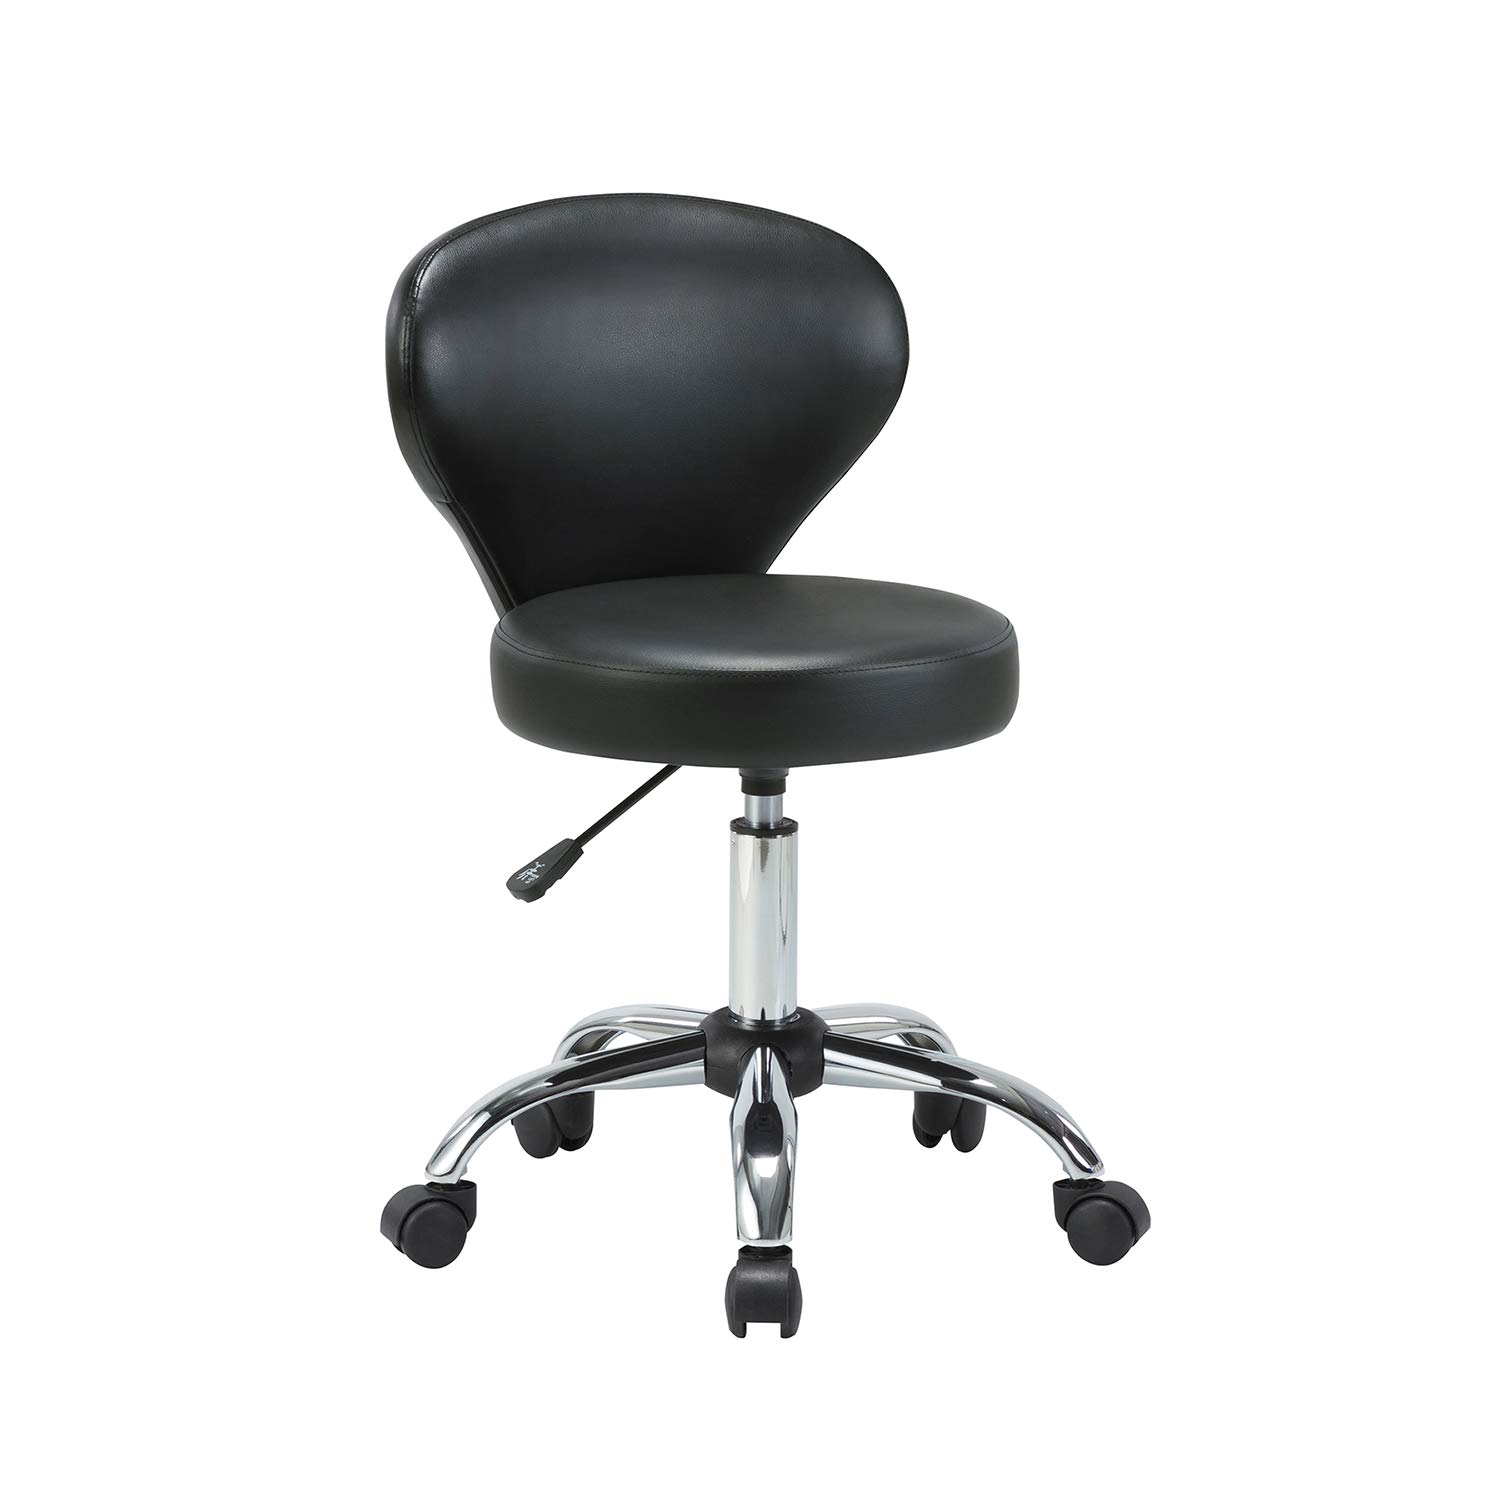 multi-color optional PU leather thick pad massage seat Luminiu Swivel stool adjustable work chair beauty salon chair 